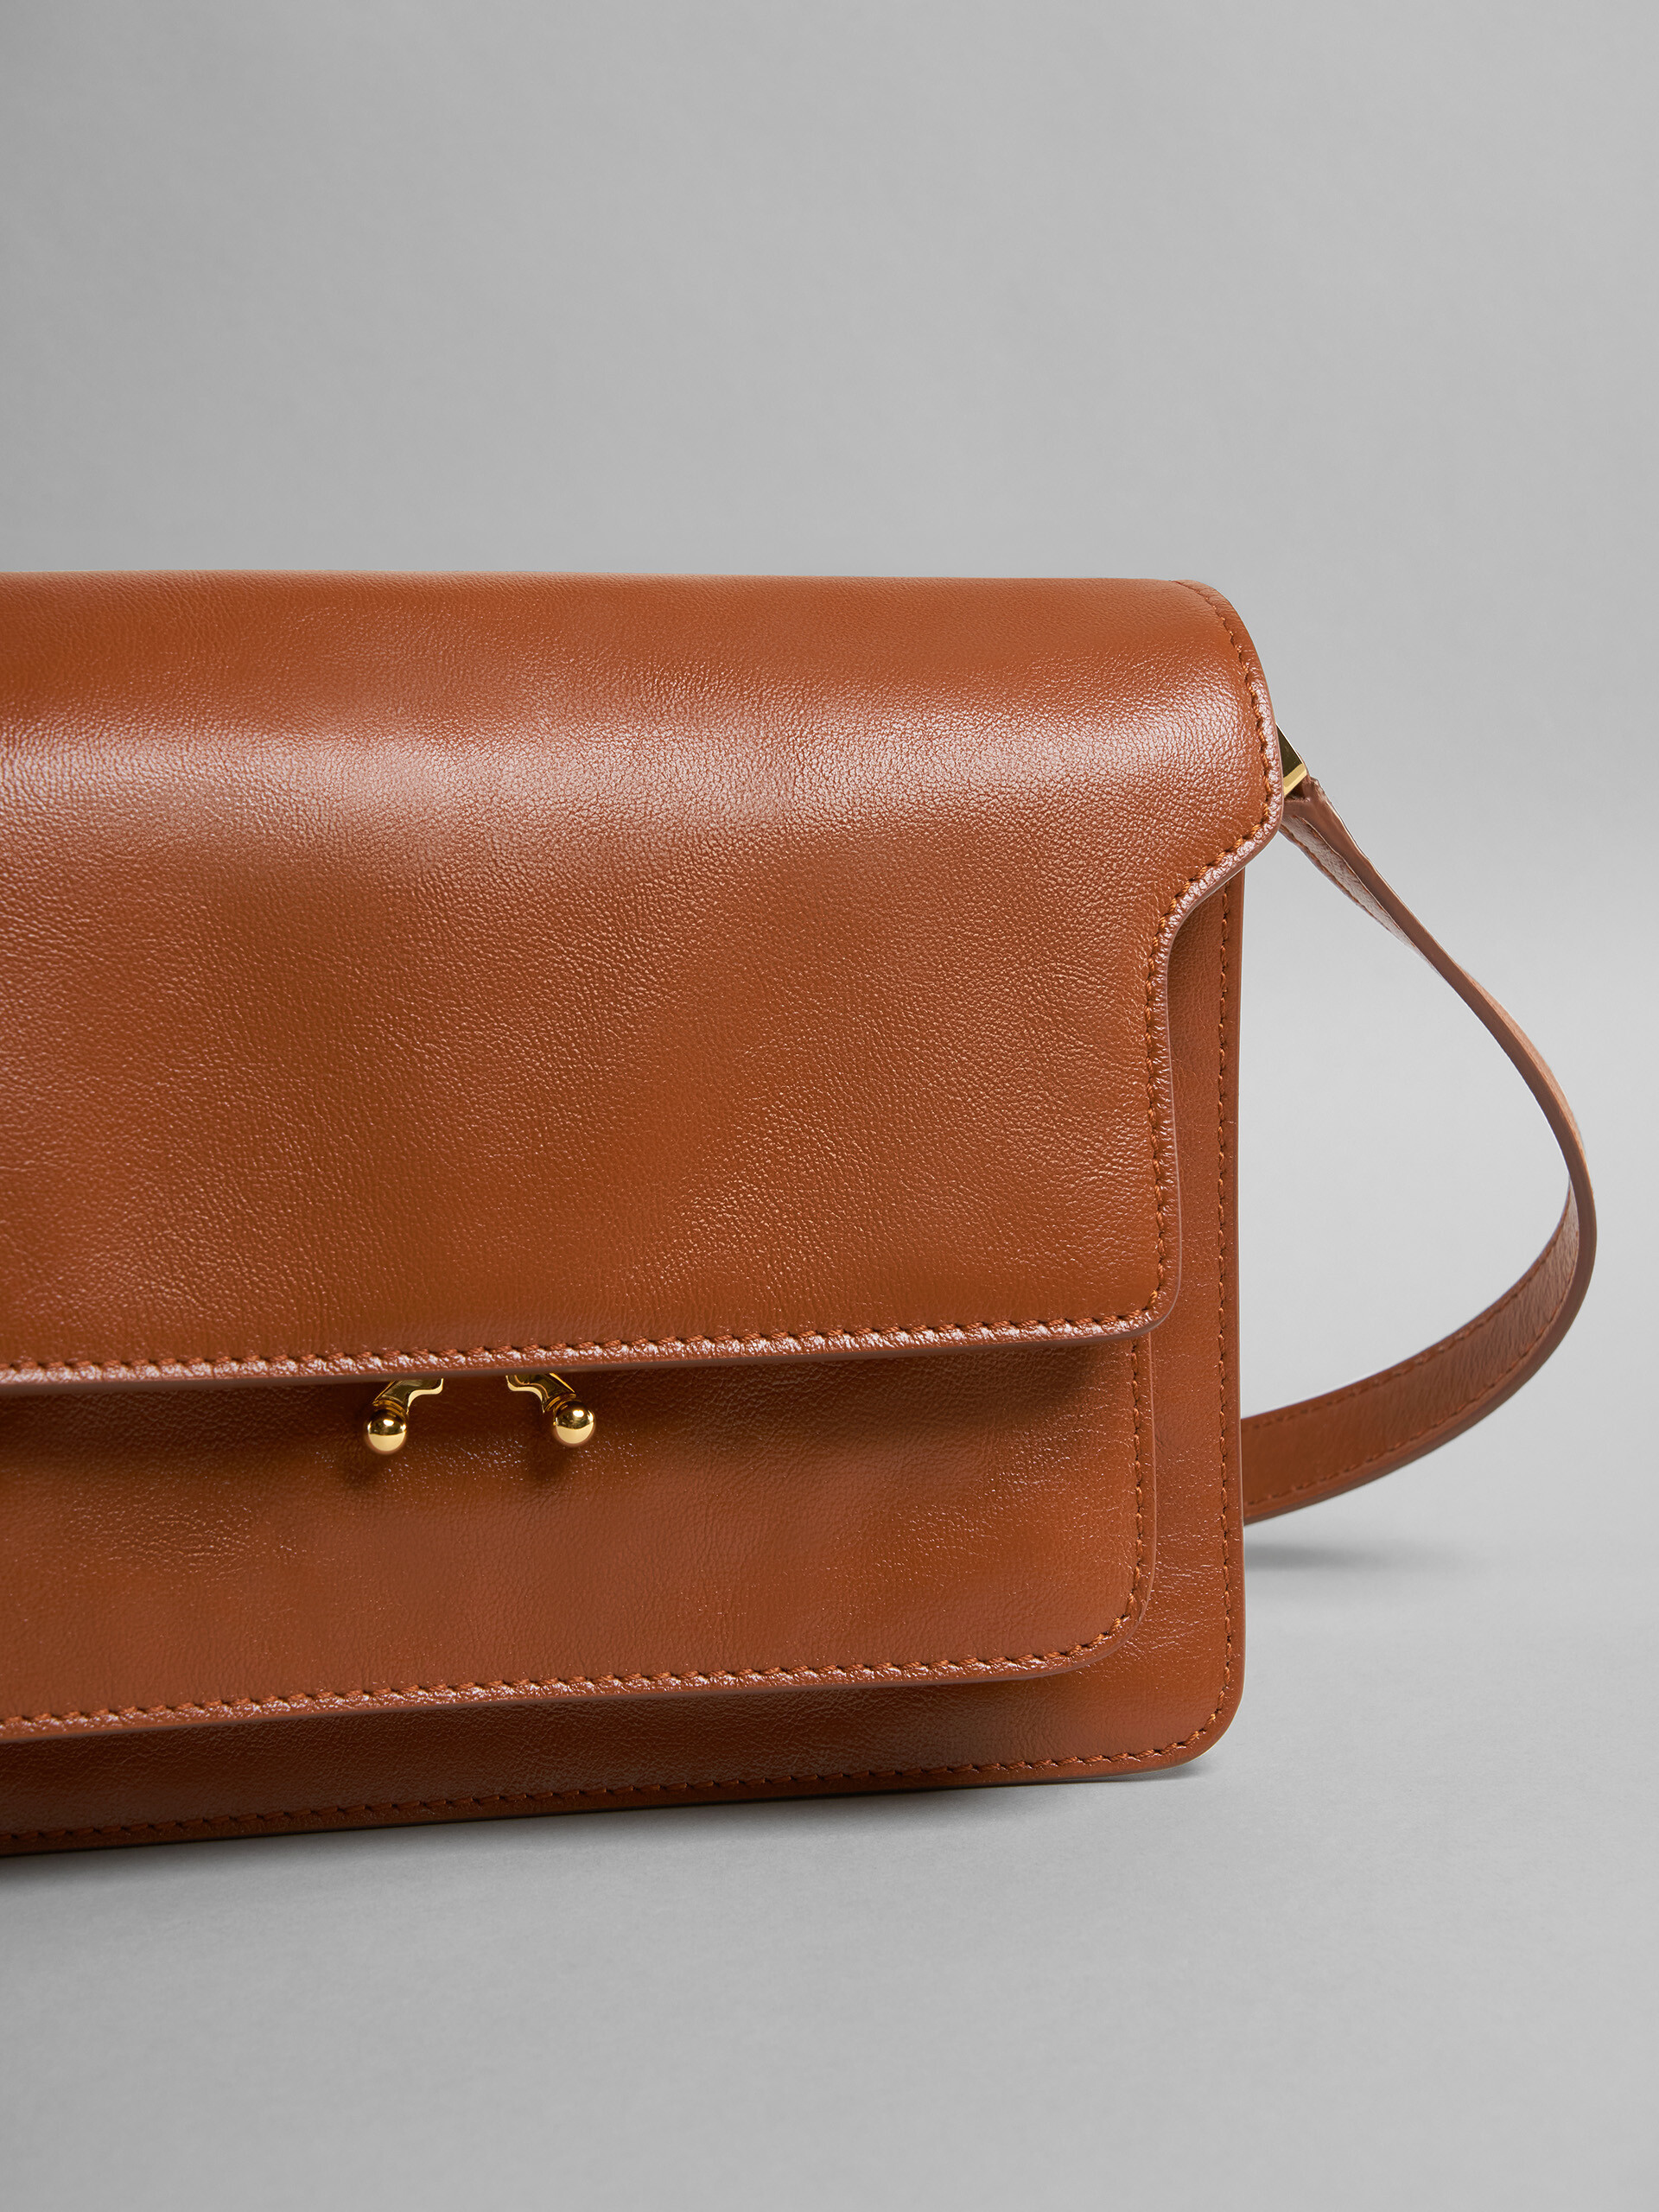 Marni Mini Trunk Soft Leather Shoulder Bag In Plum